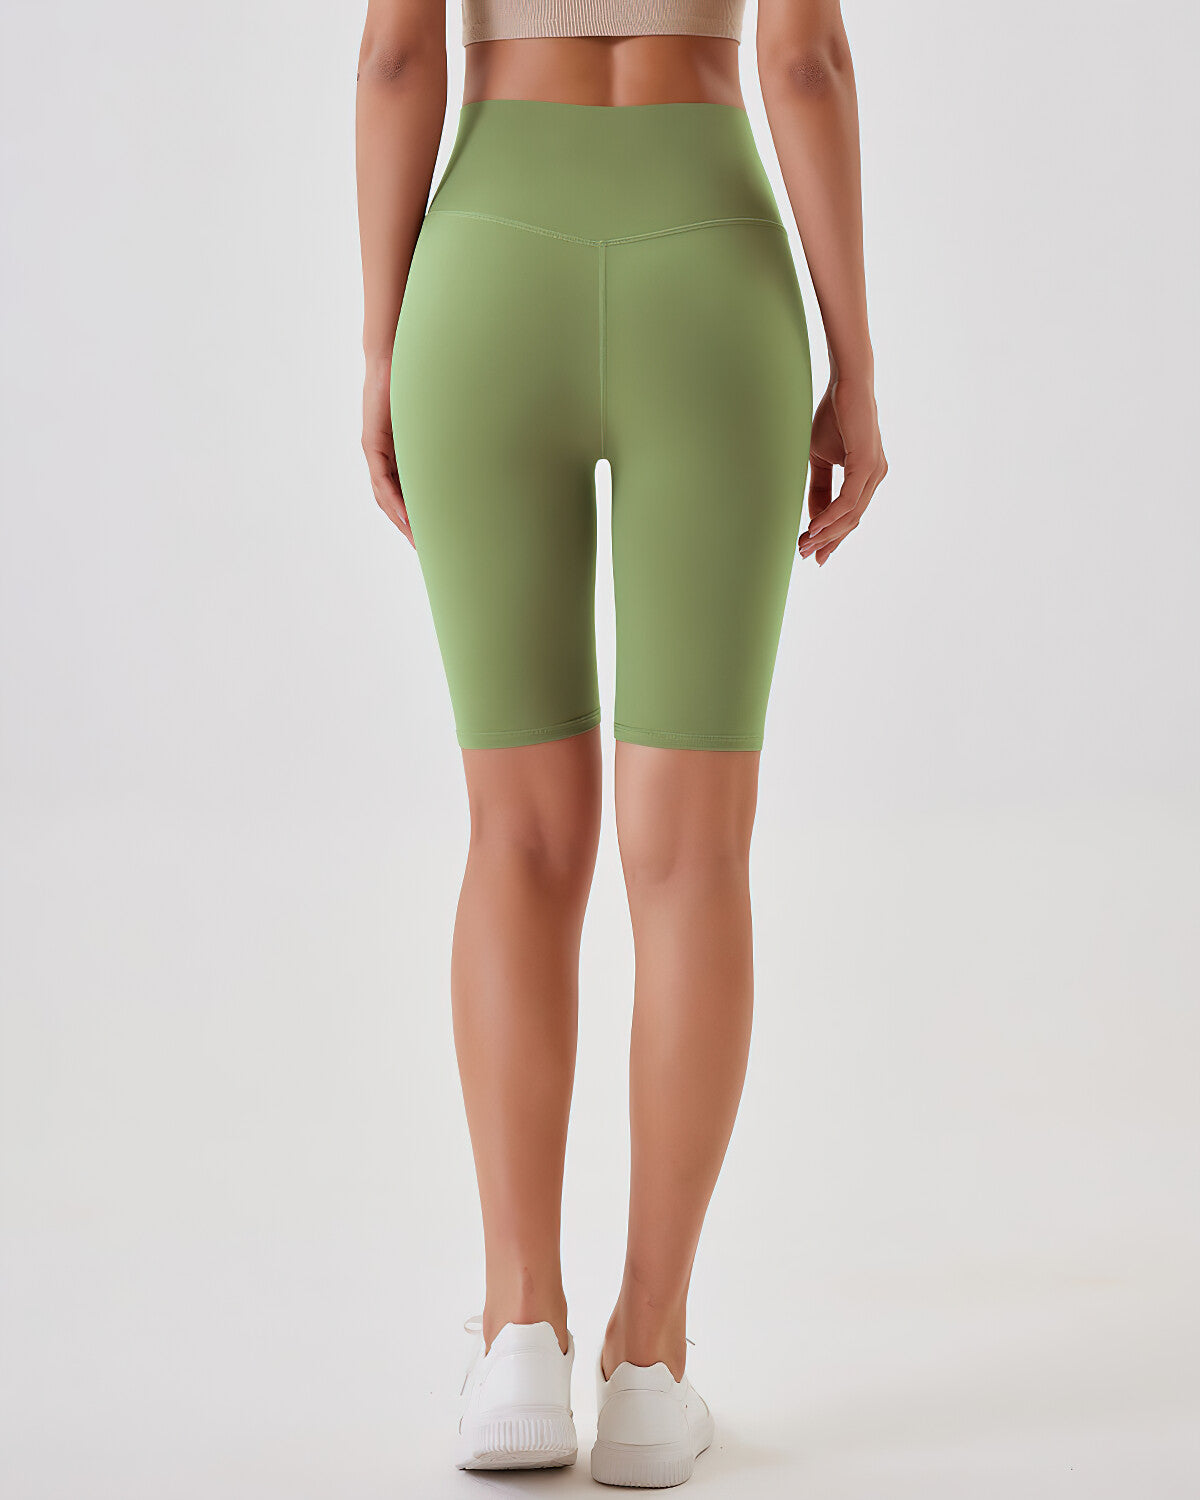 Lara Seamless Biker Shorts - Avocado